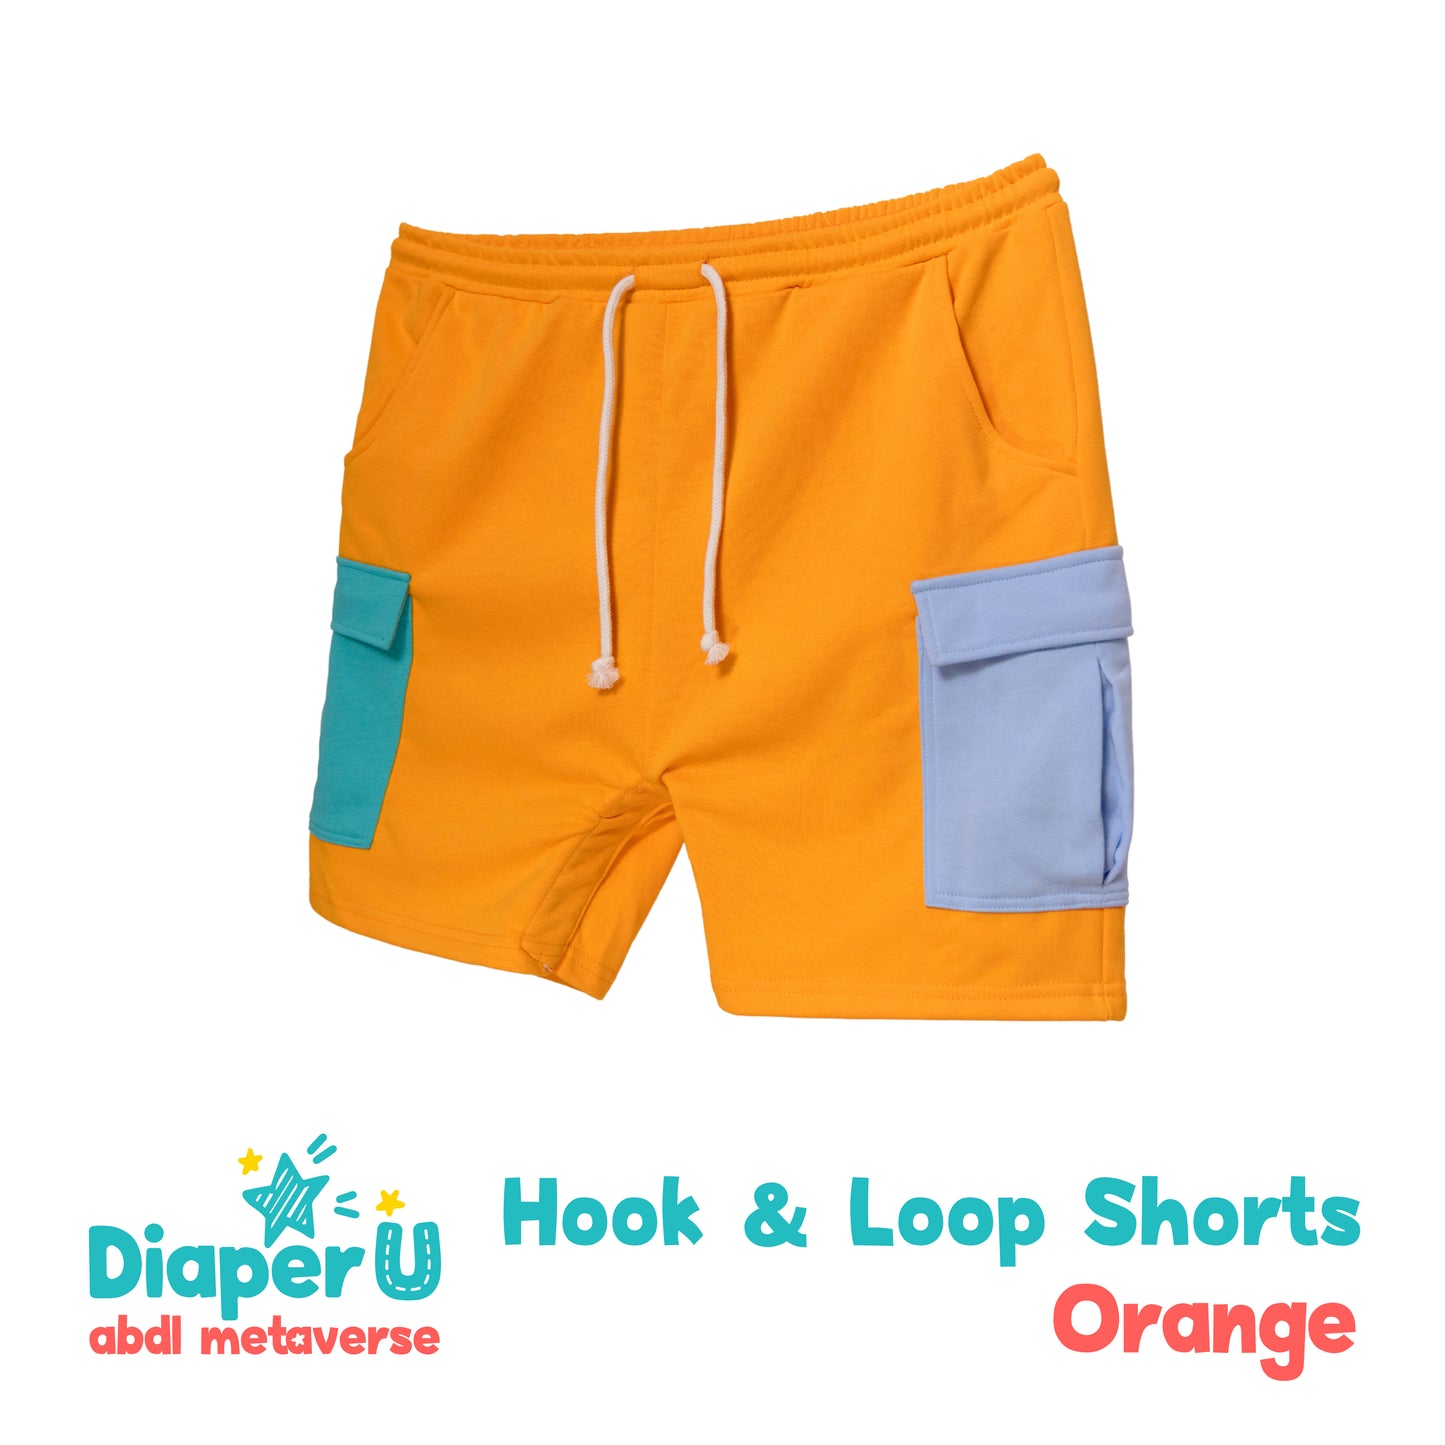 Hook & Loop Shorts - Orange (Limited Edition)